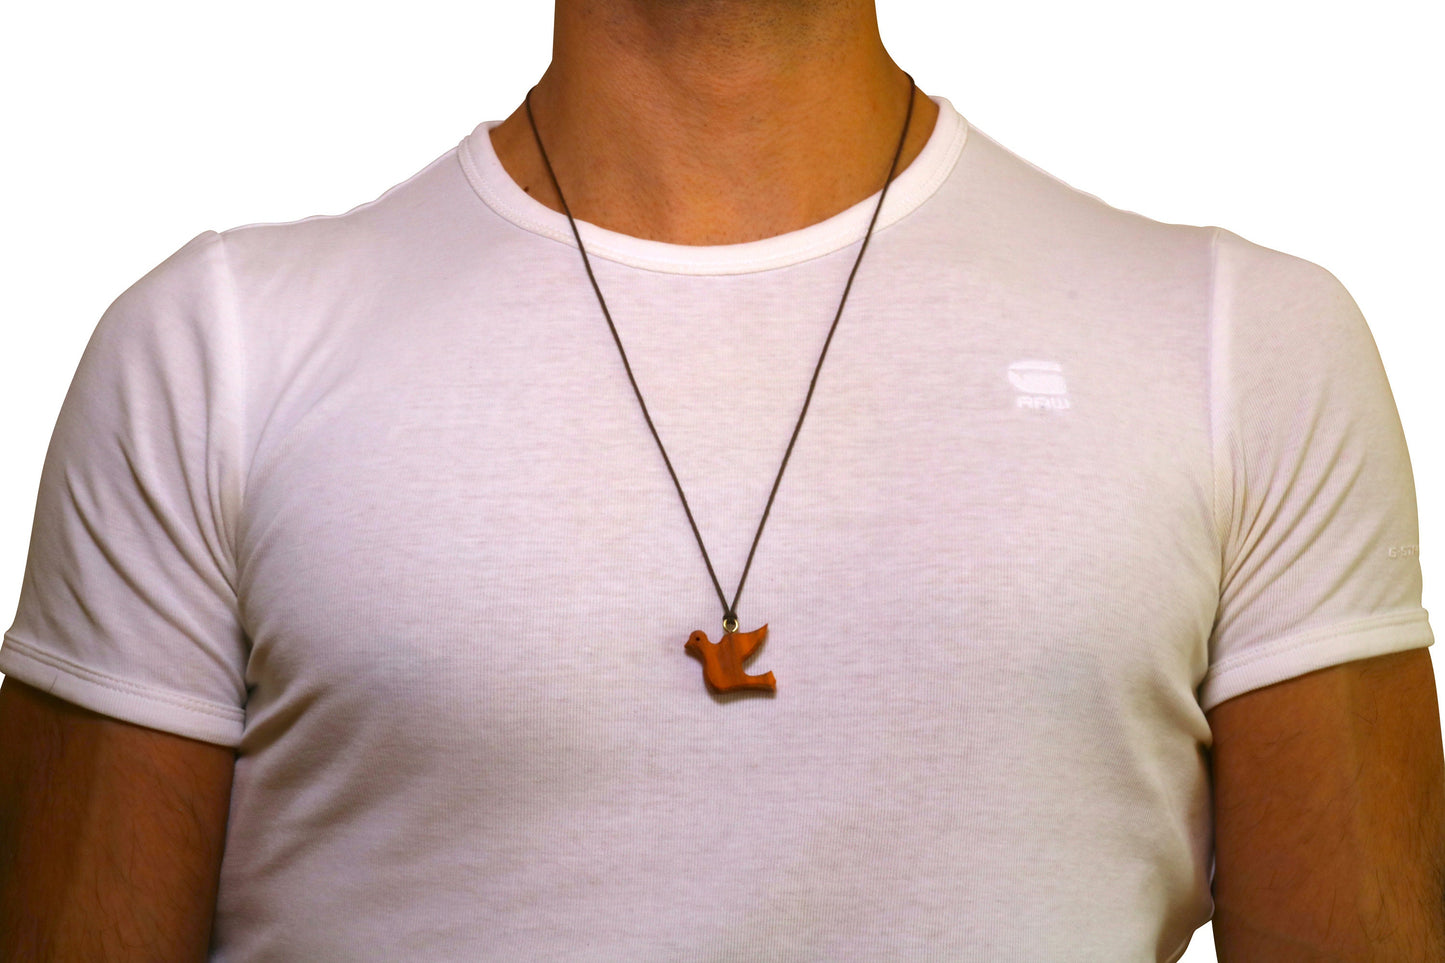 Dove olive wood Christianity baptism symbol Jesus cross pendant necklace handmade in Nazareth For Men, Women, Boys & Girls